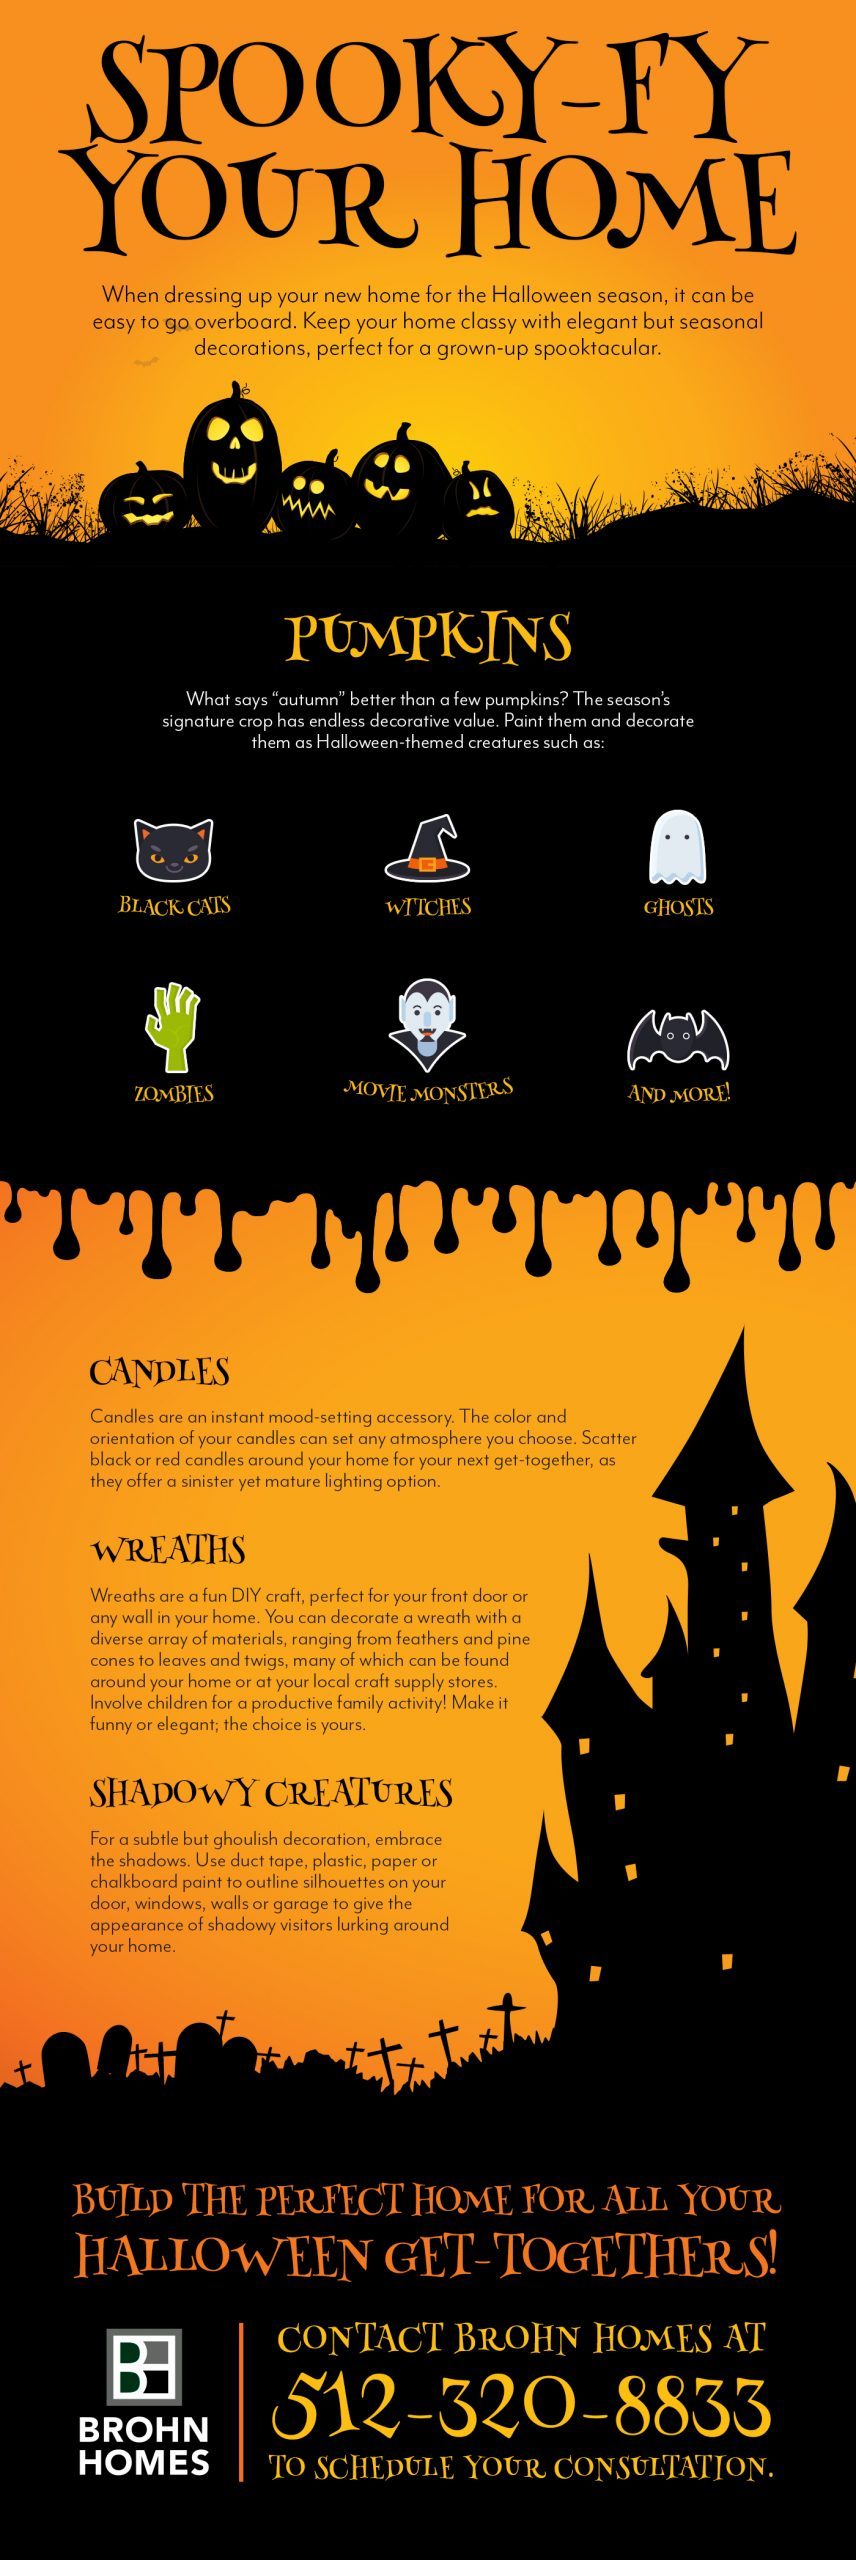 brohn-homes_batch-10-infographic_halloween-decor-1017-6683335